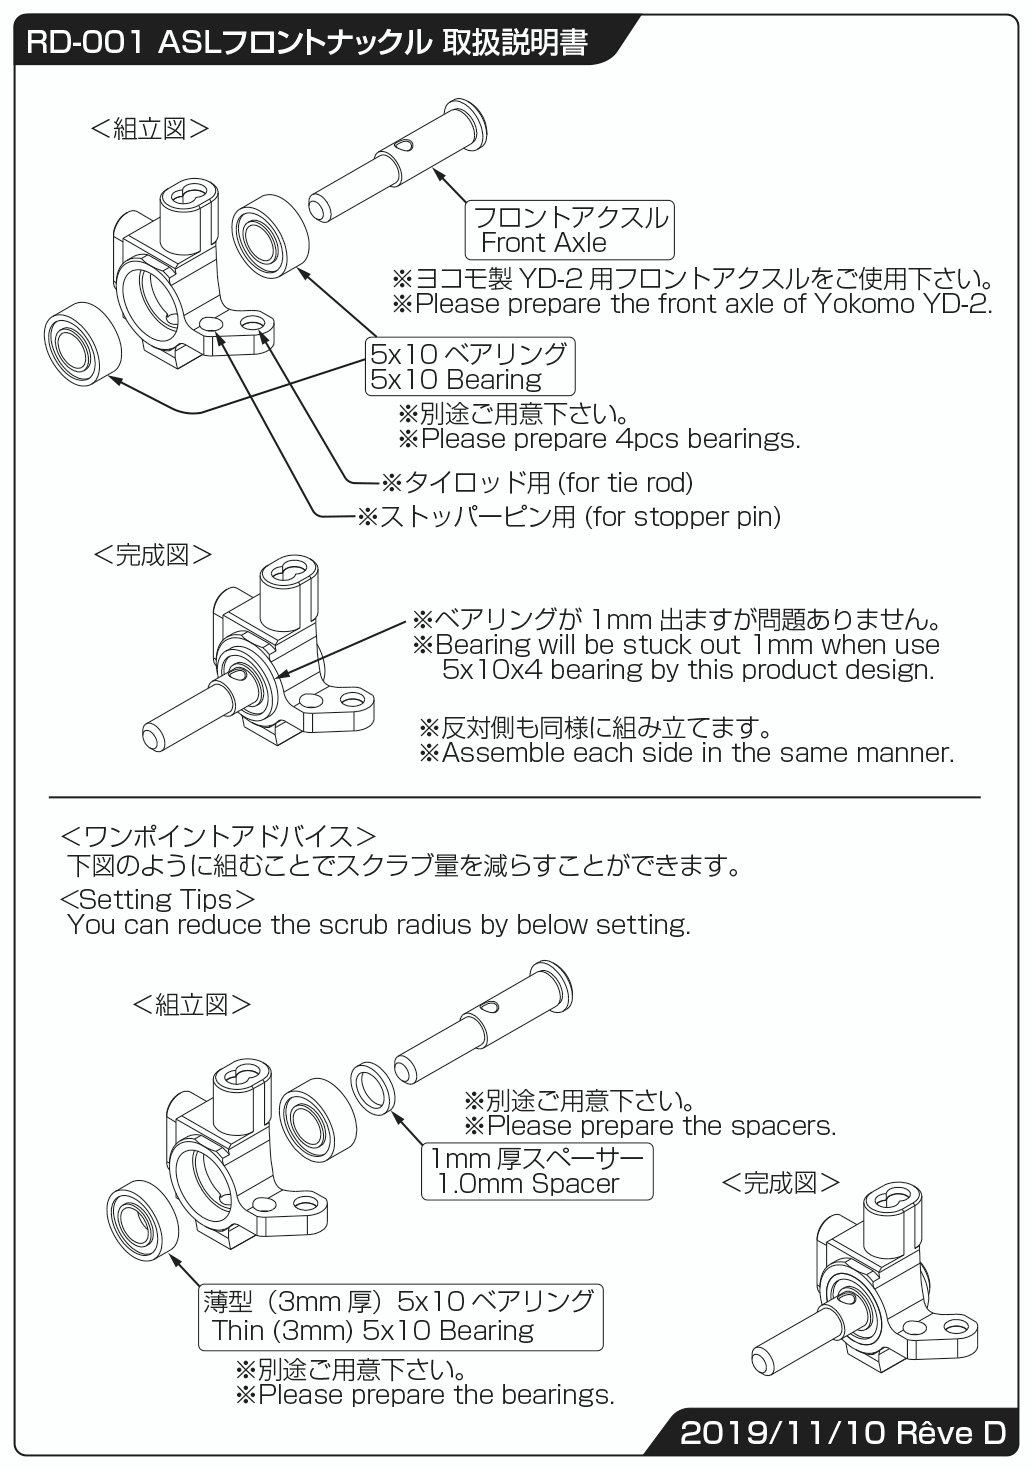 RD-001_Nuckle_Manual.ai